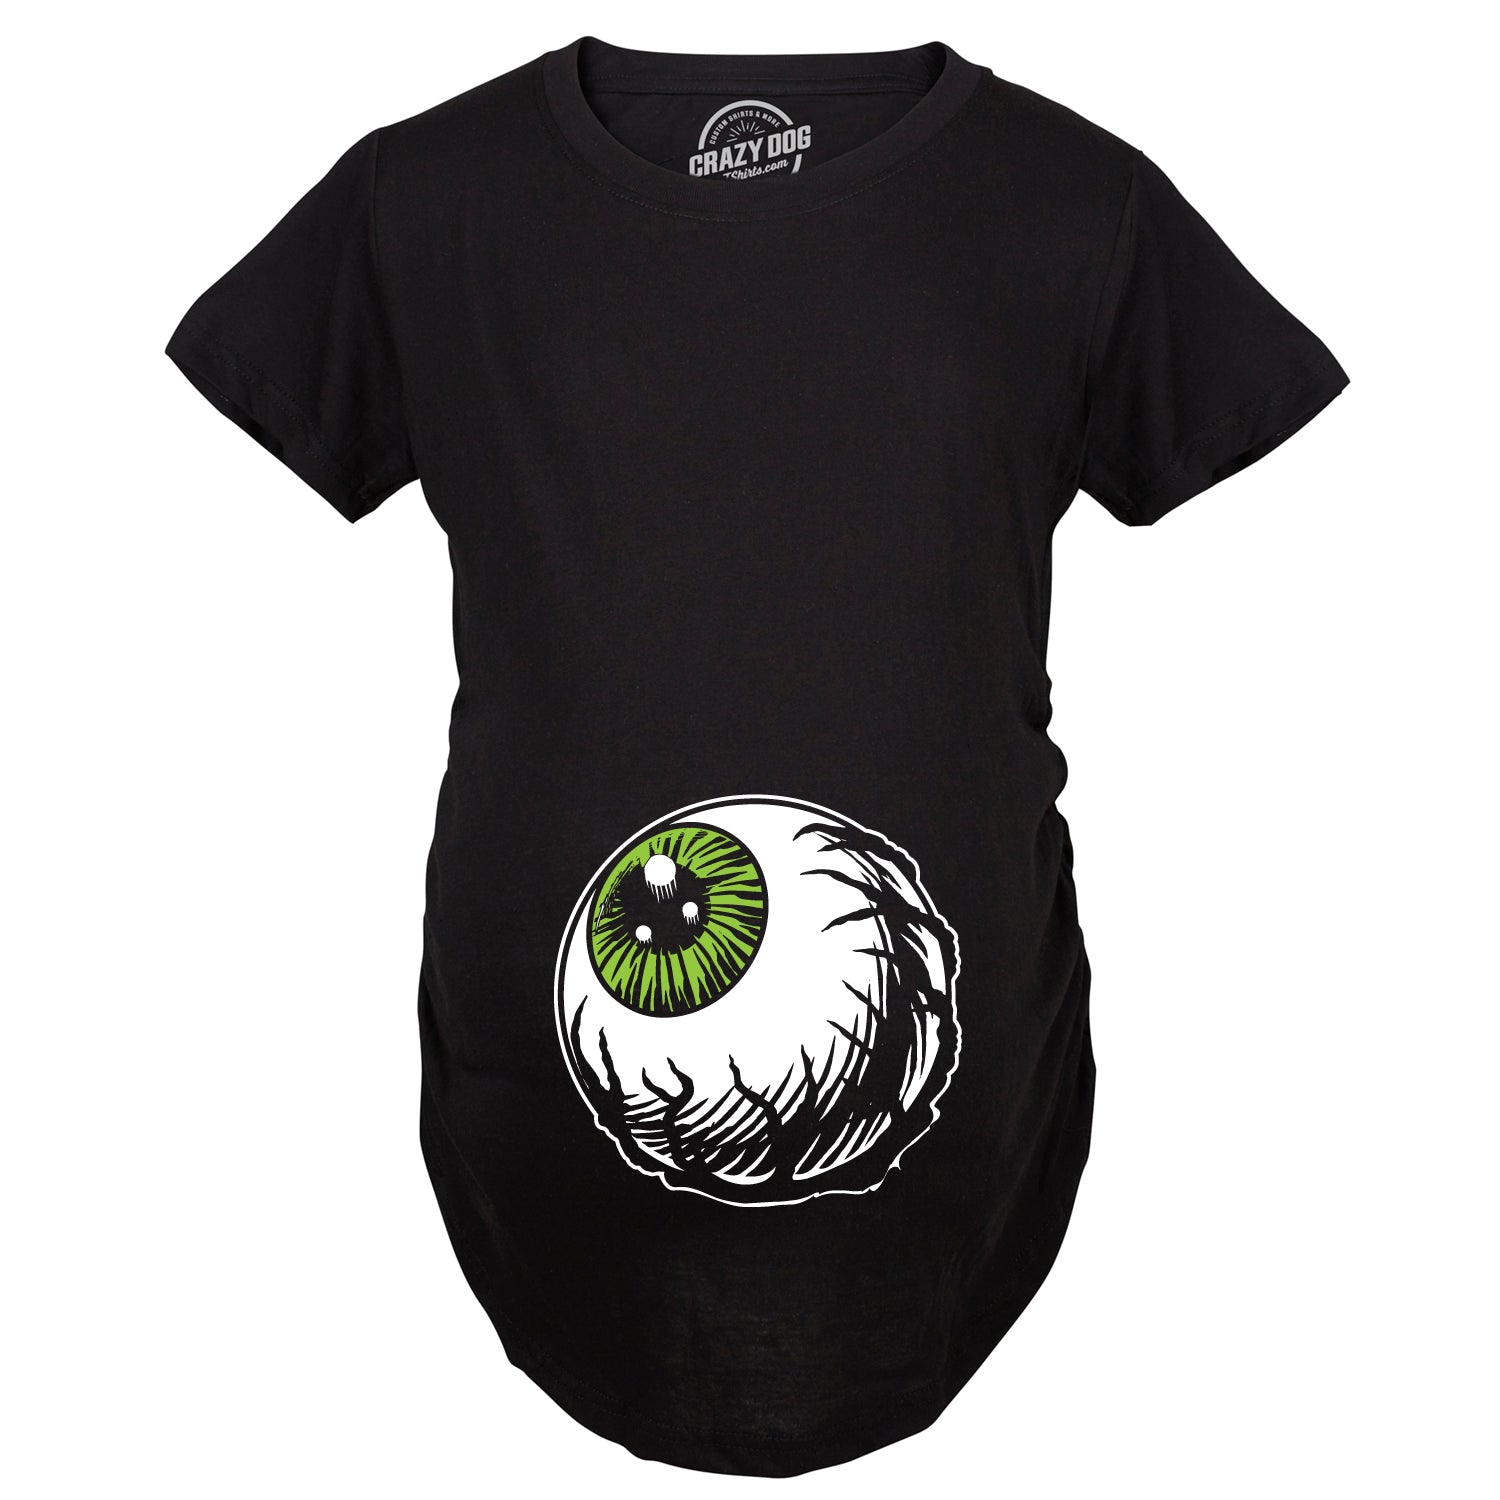 Funny Black Eyeball Maternity T Shirt Nerdy Halloween Tee